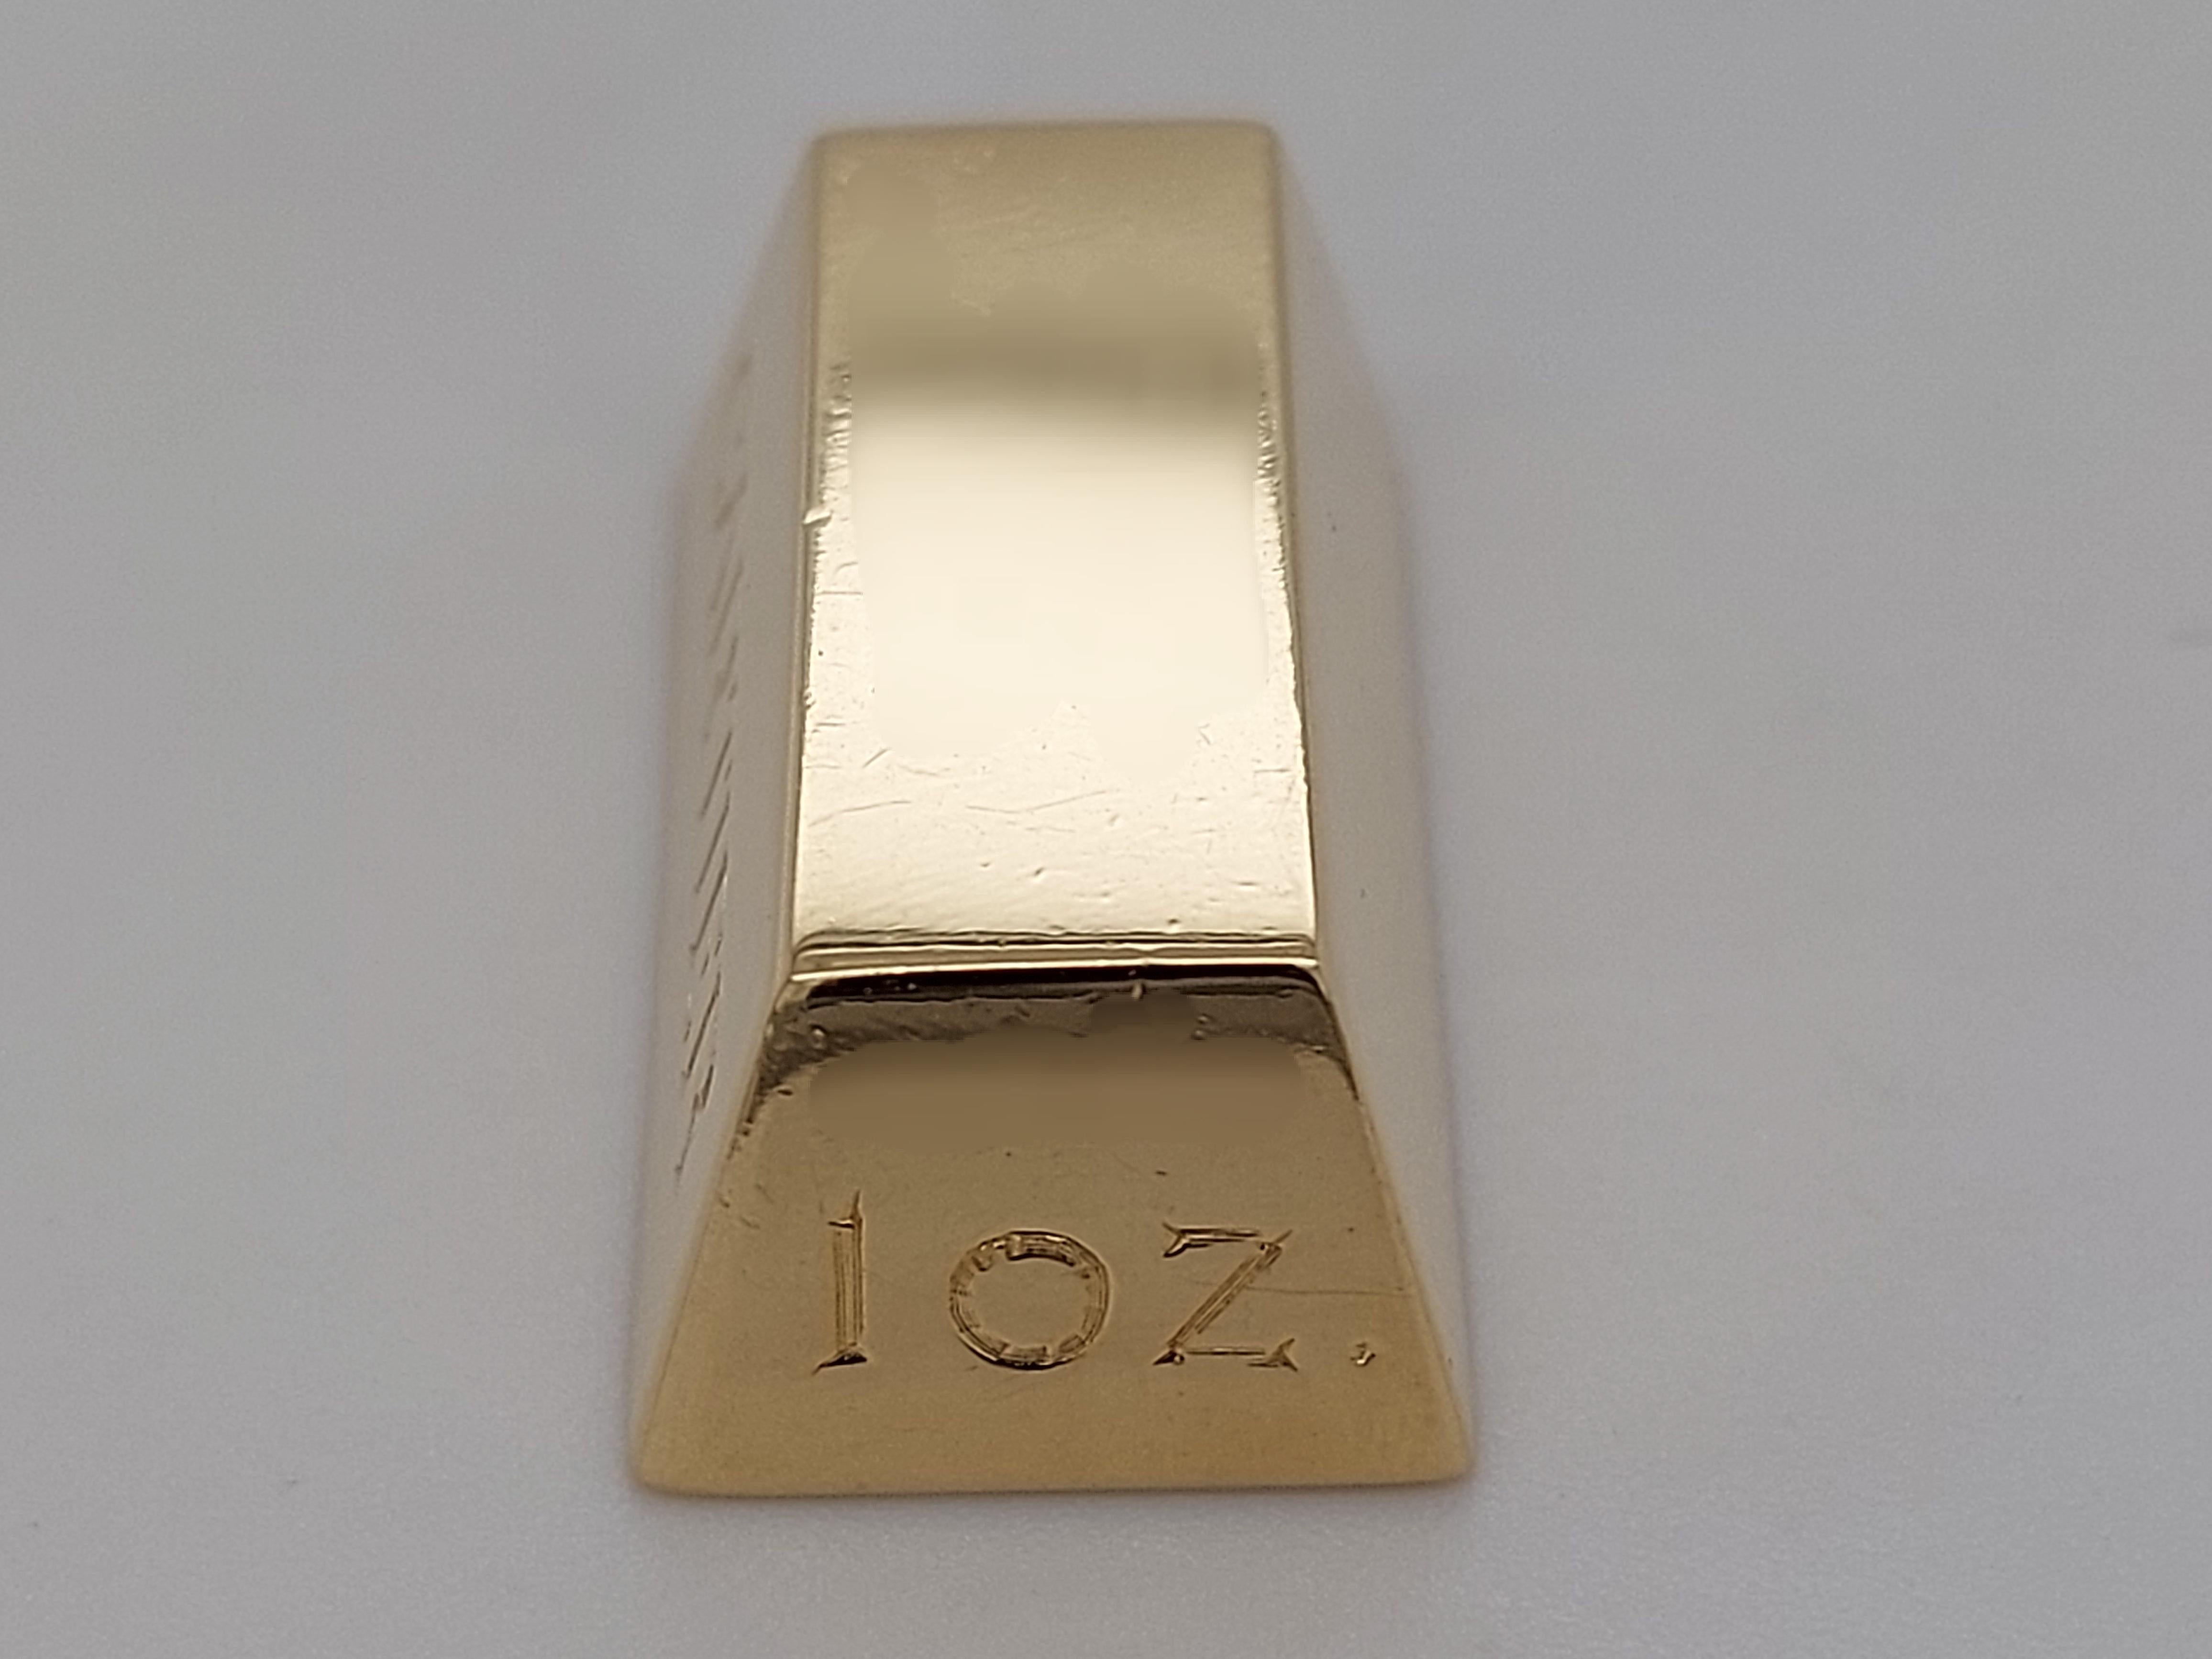 Cartier 1 oz Ingot Brick Bar Solid 18 Karat Gold Charm or Pendant from 1970s 2